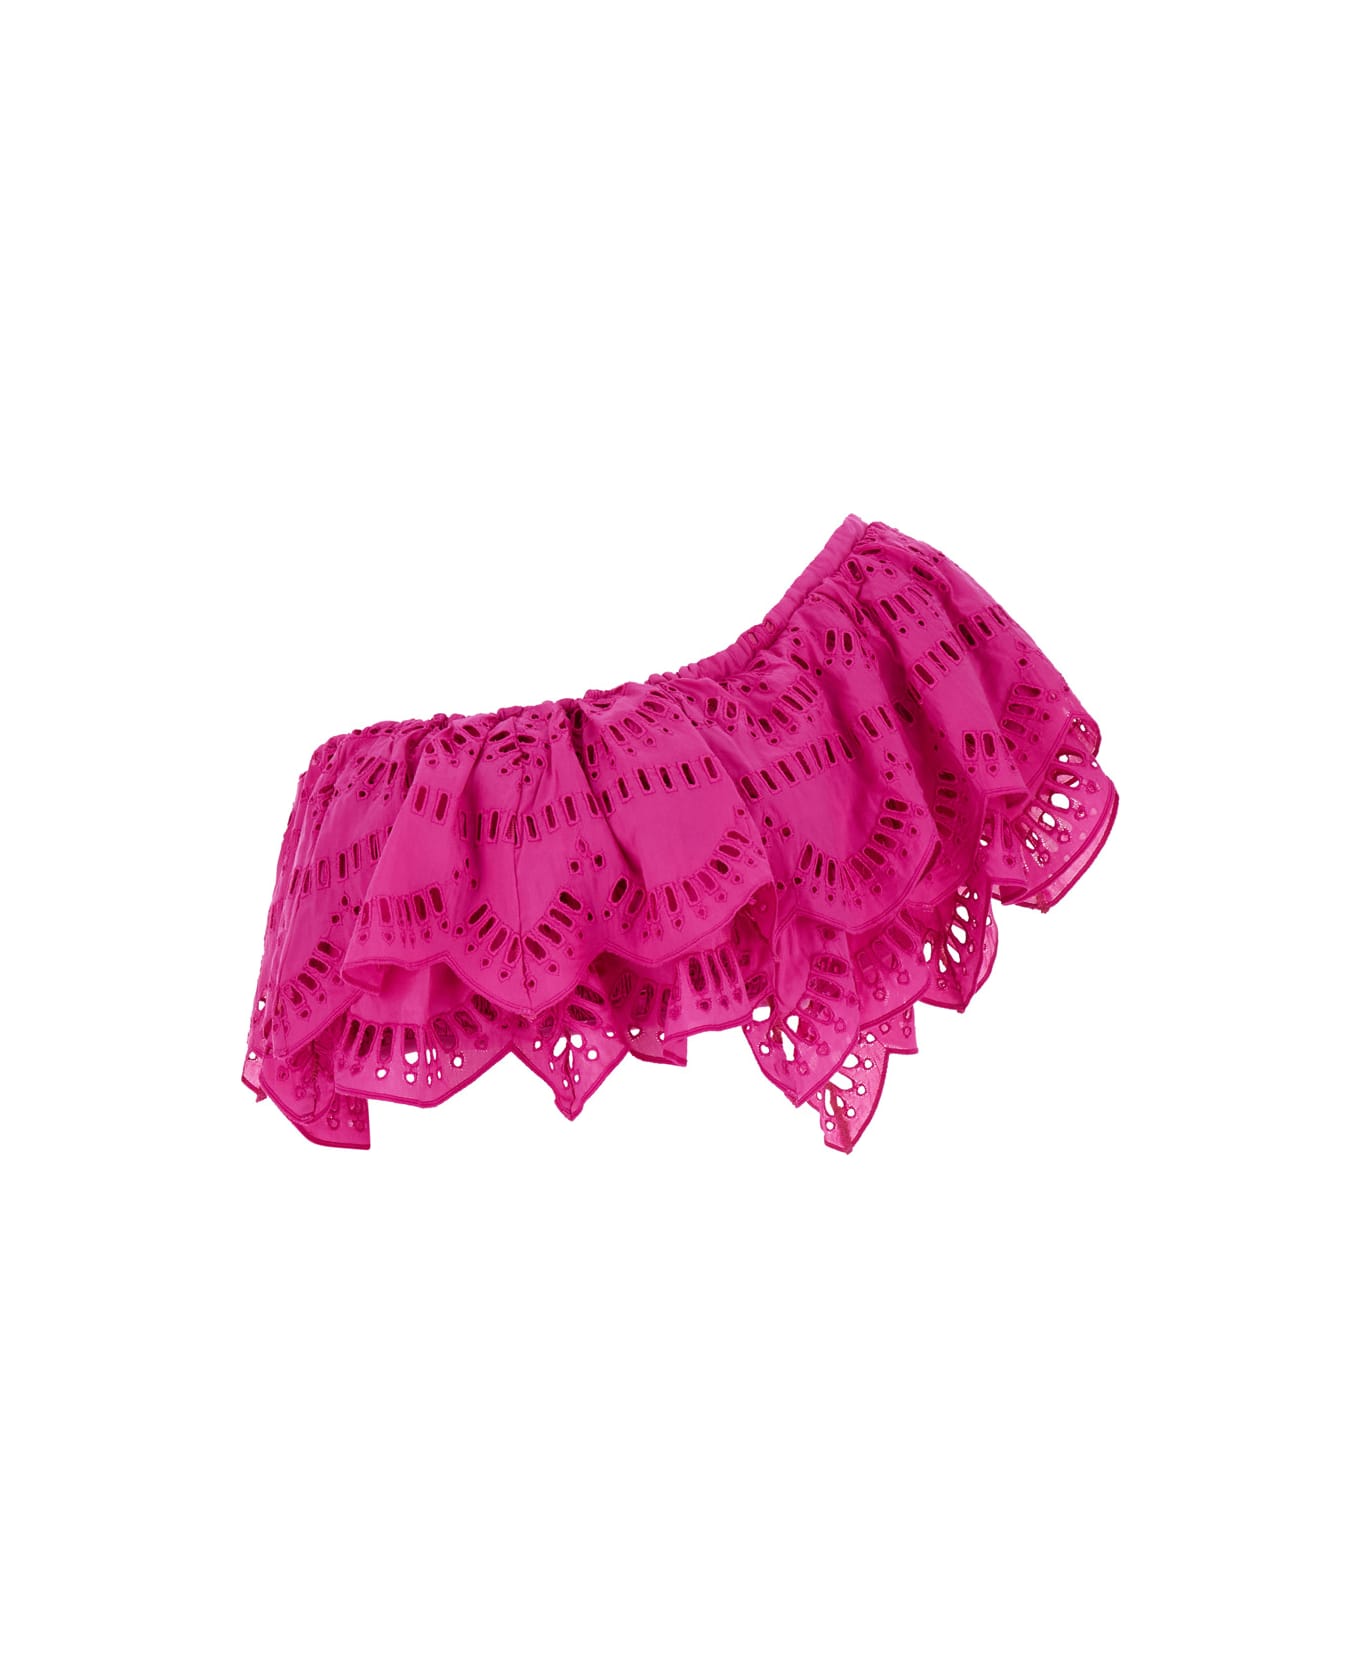 Charo Ruiz Fuchsia One-shoulder Top With Crochet Work In Cotton Blend Woman - Pink